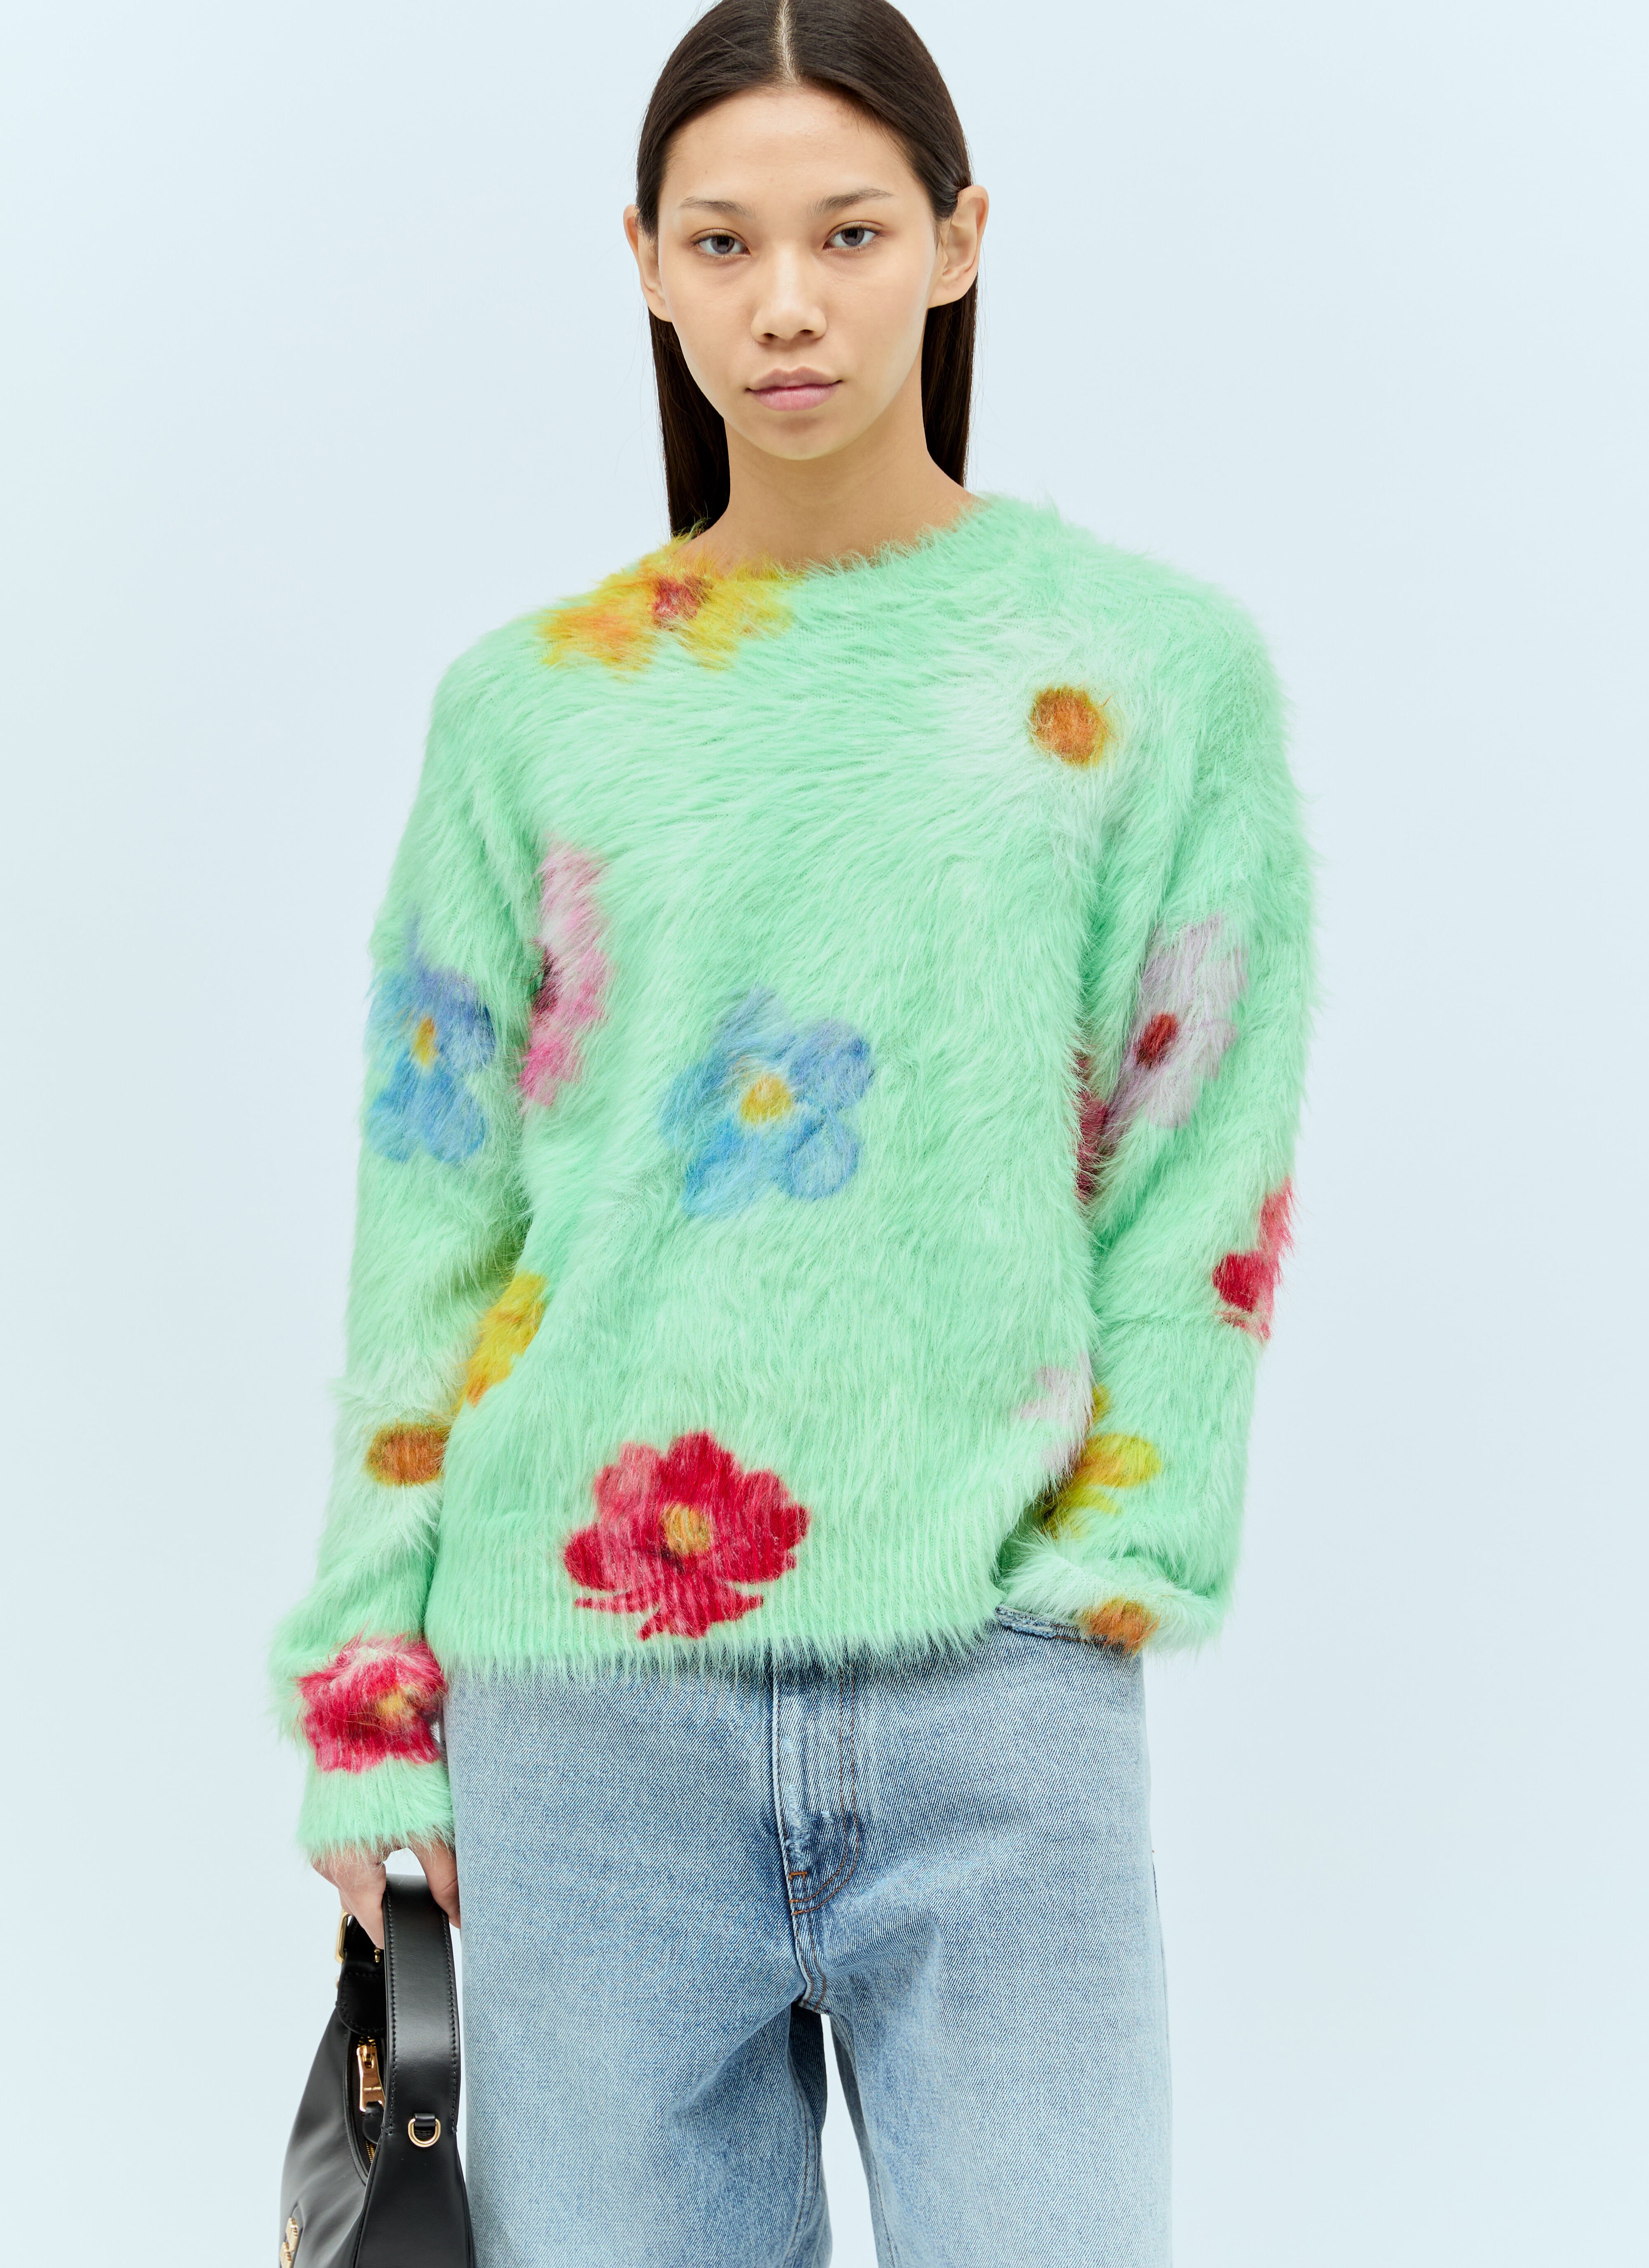 Gucci Printed Fluffy Sweater Beige guc0255027